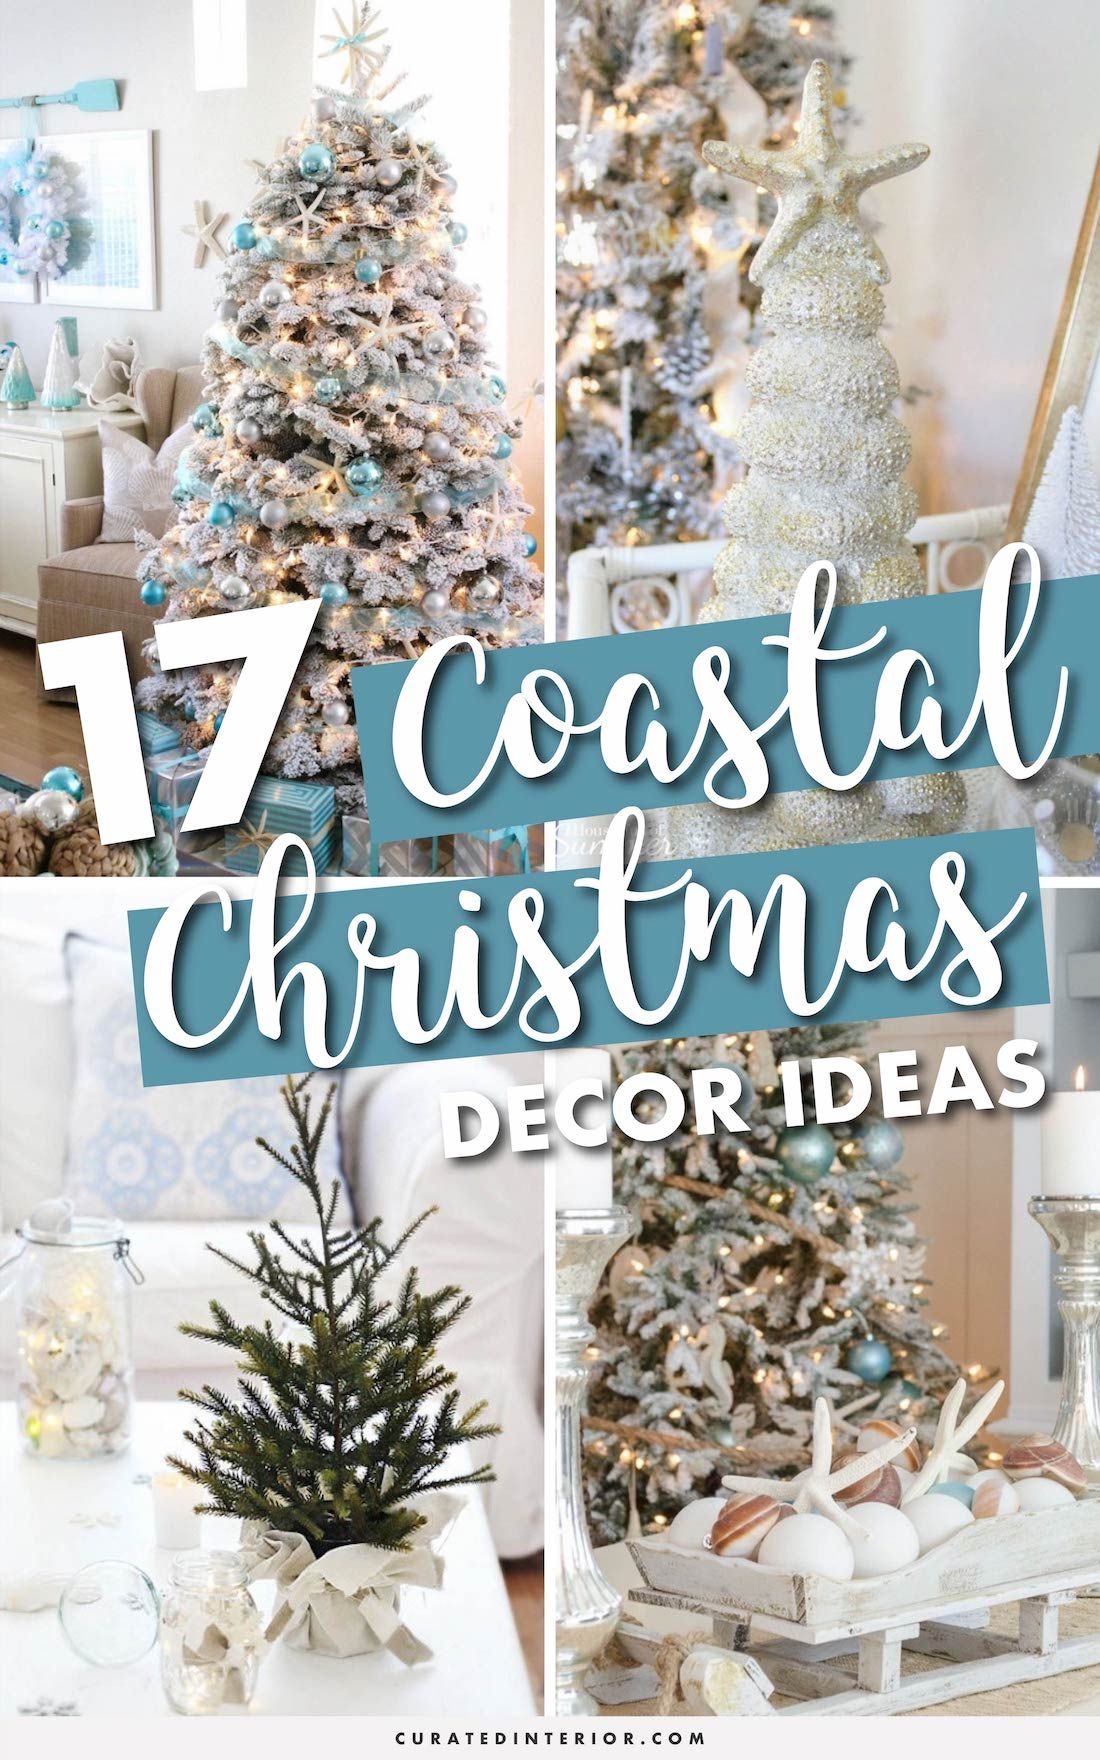 17 Coastal Christmas Decor Ideas #CoastalDecor #ChristmasDecor #CoastalChristmas